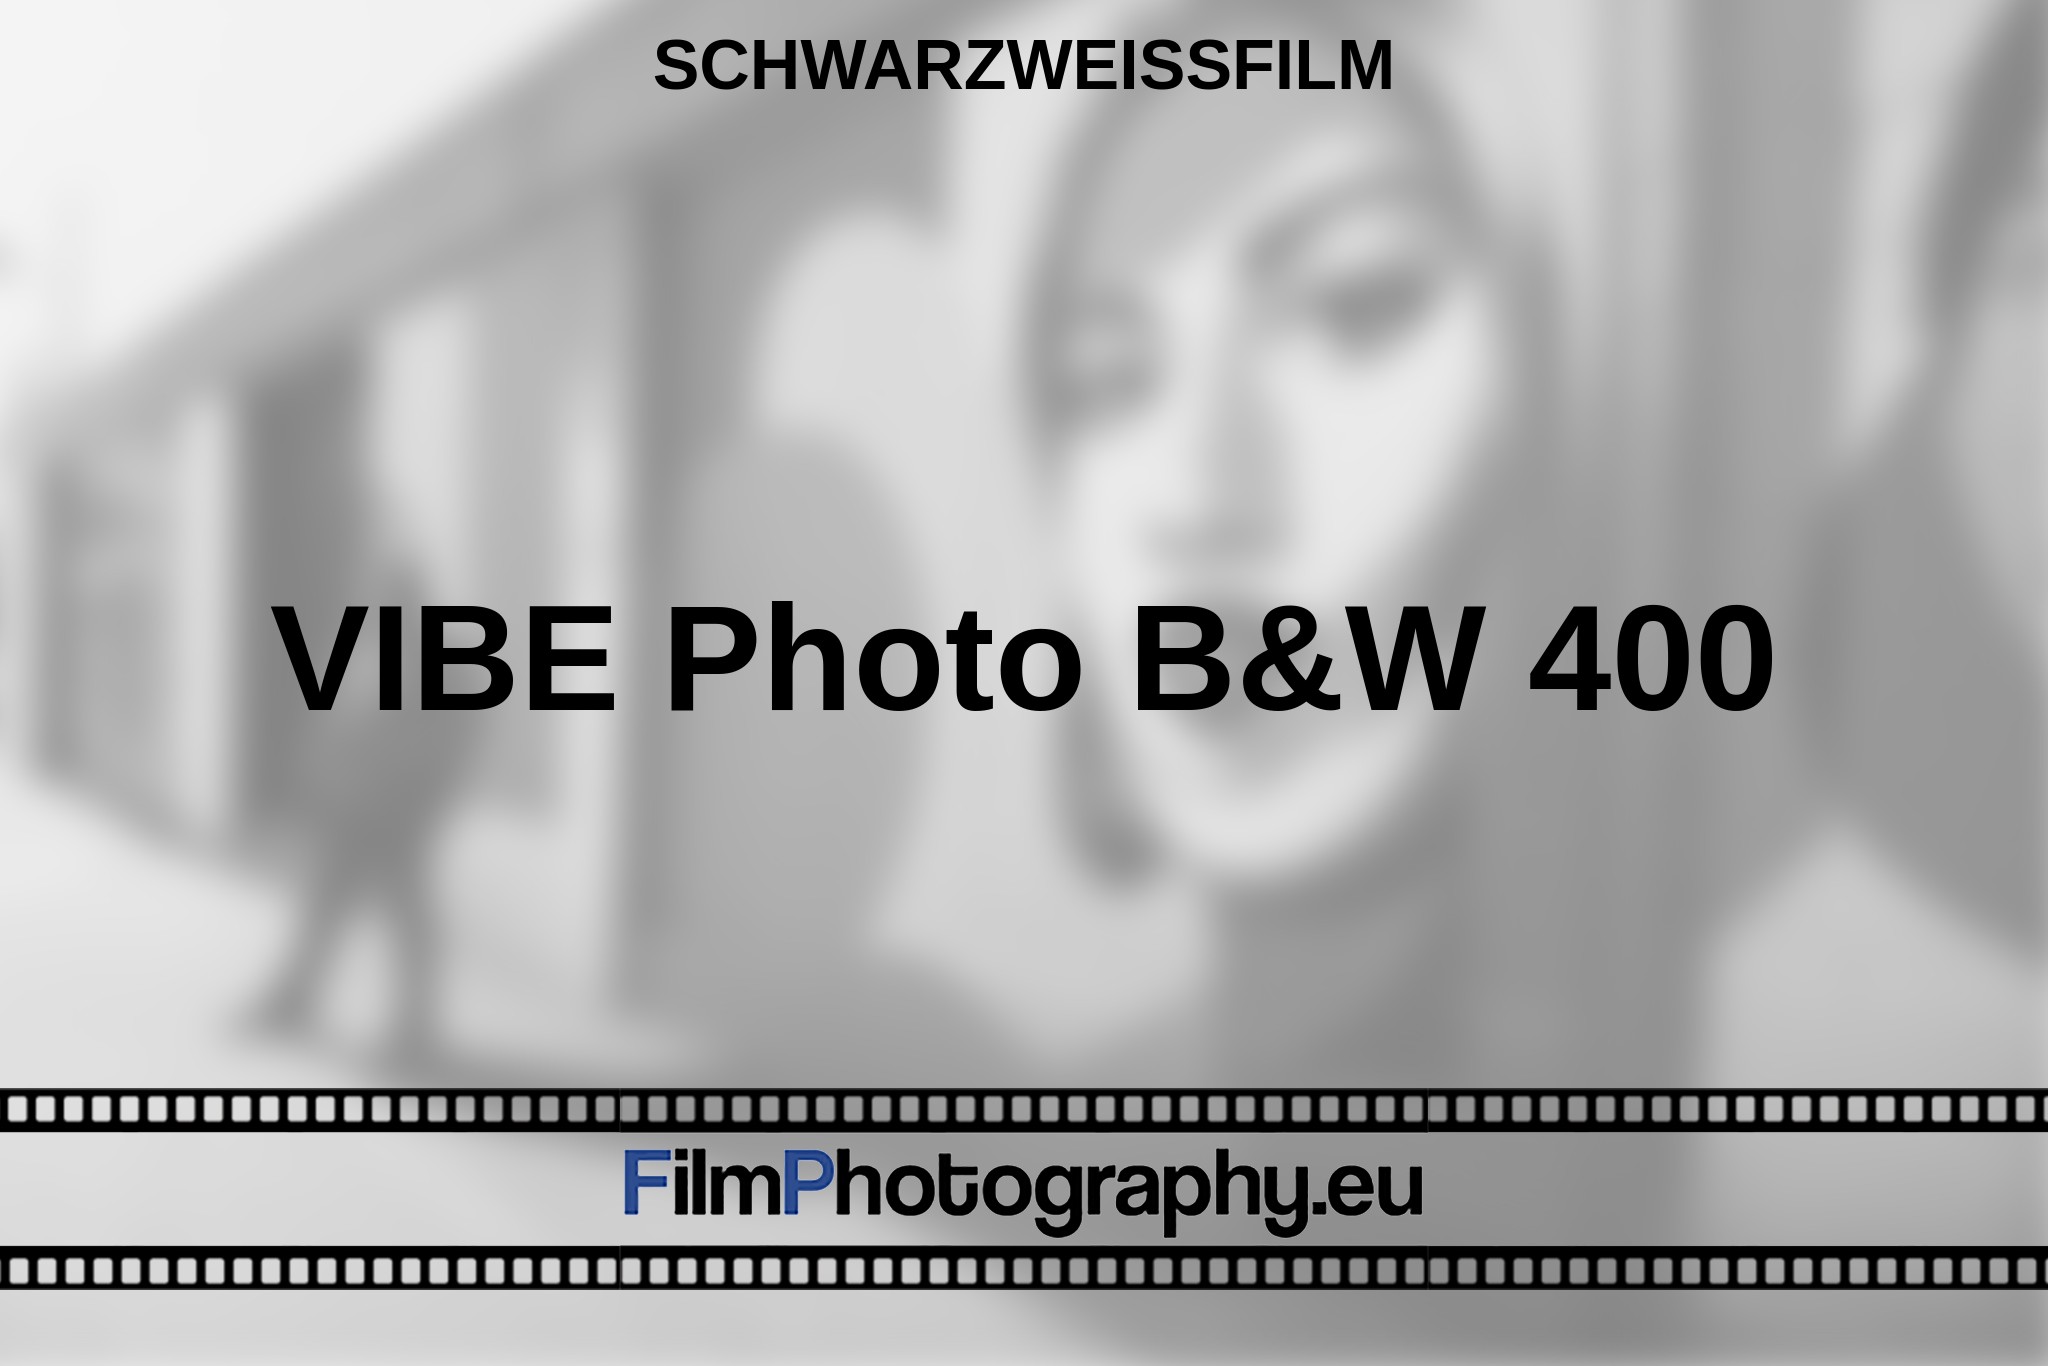 vibe-photo-b-w-400-schwarzweißfilm-bnv.jpg